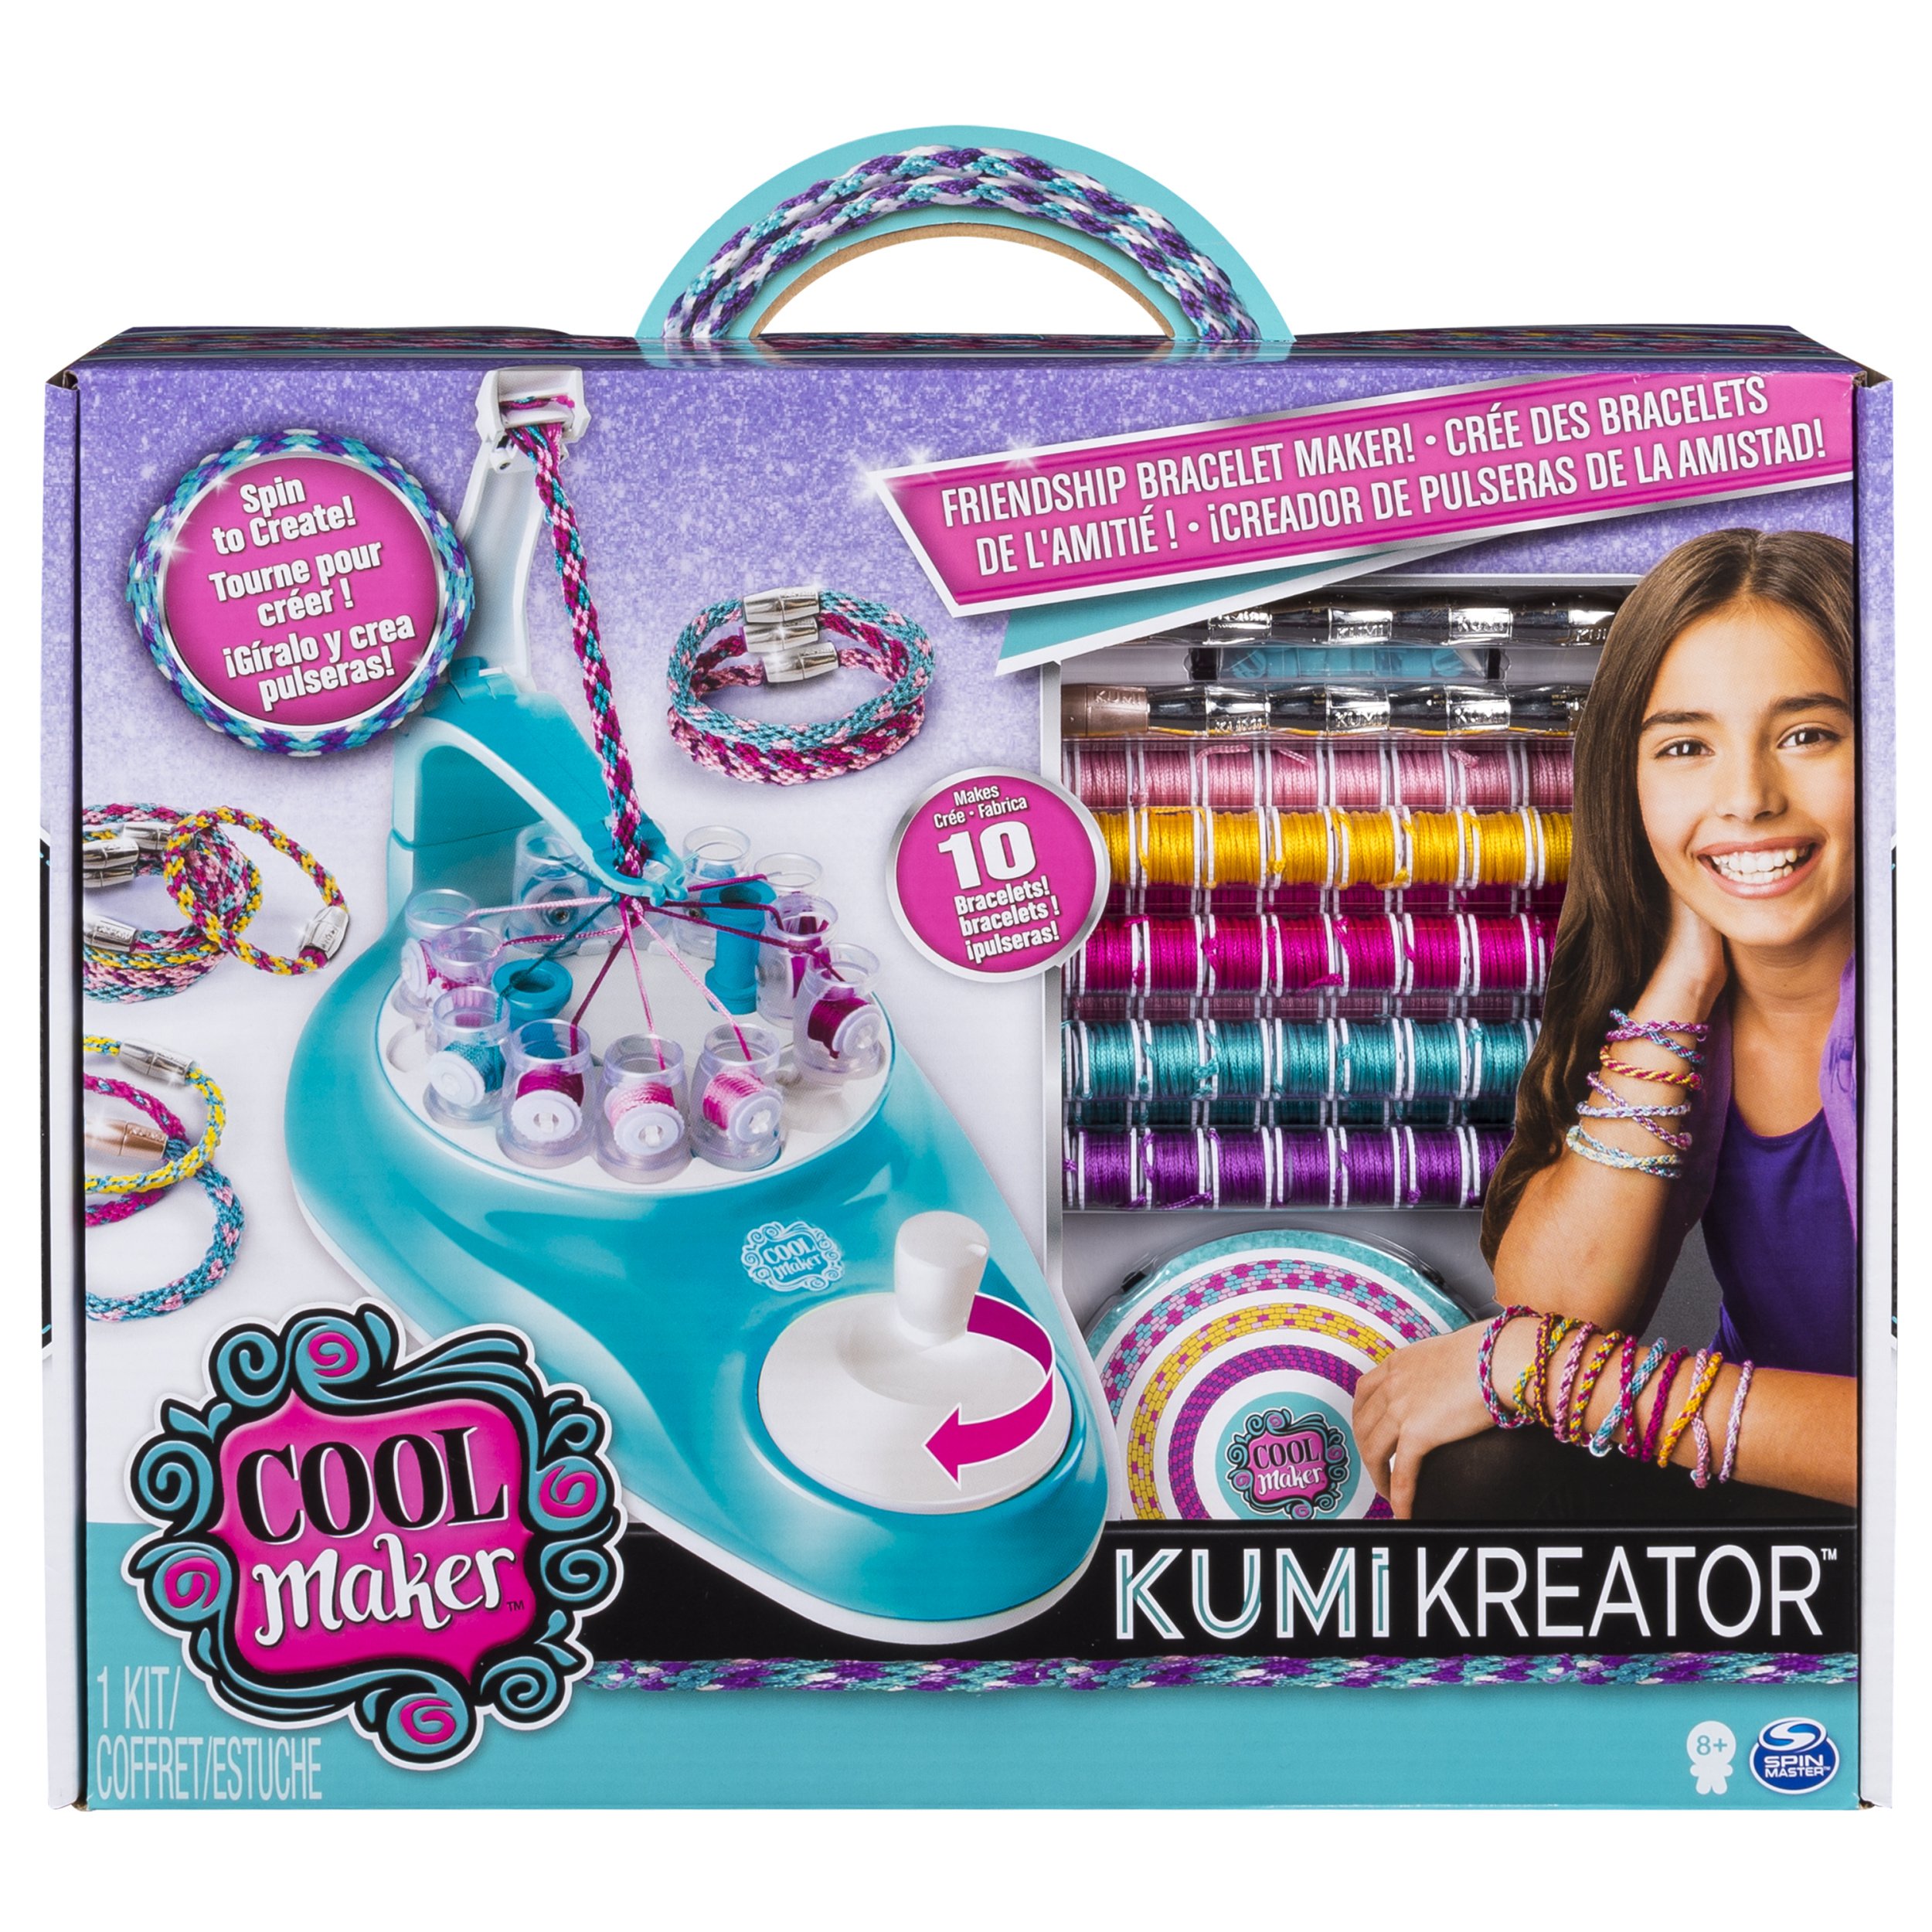 Cool Maker 6045336 KumiKreator Friendship Bracelet Maker, Quick & Easy Activity Kit for Kids, Ages 8 and Up